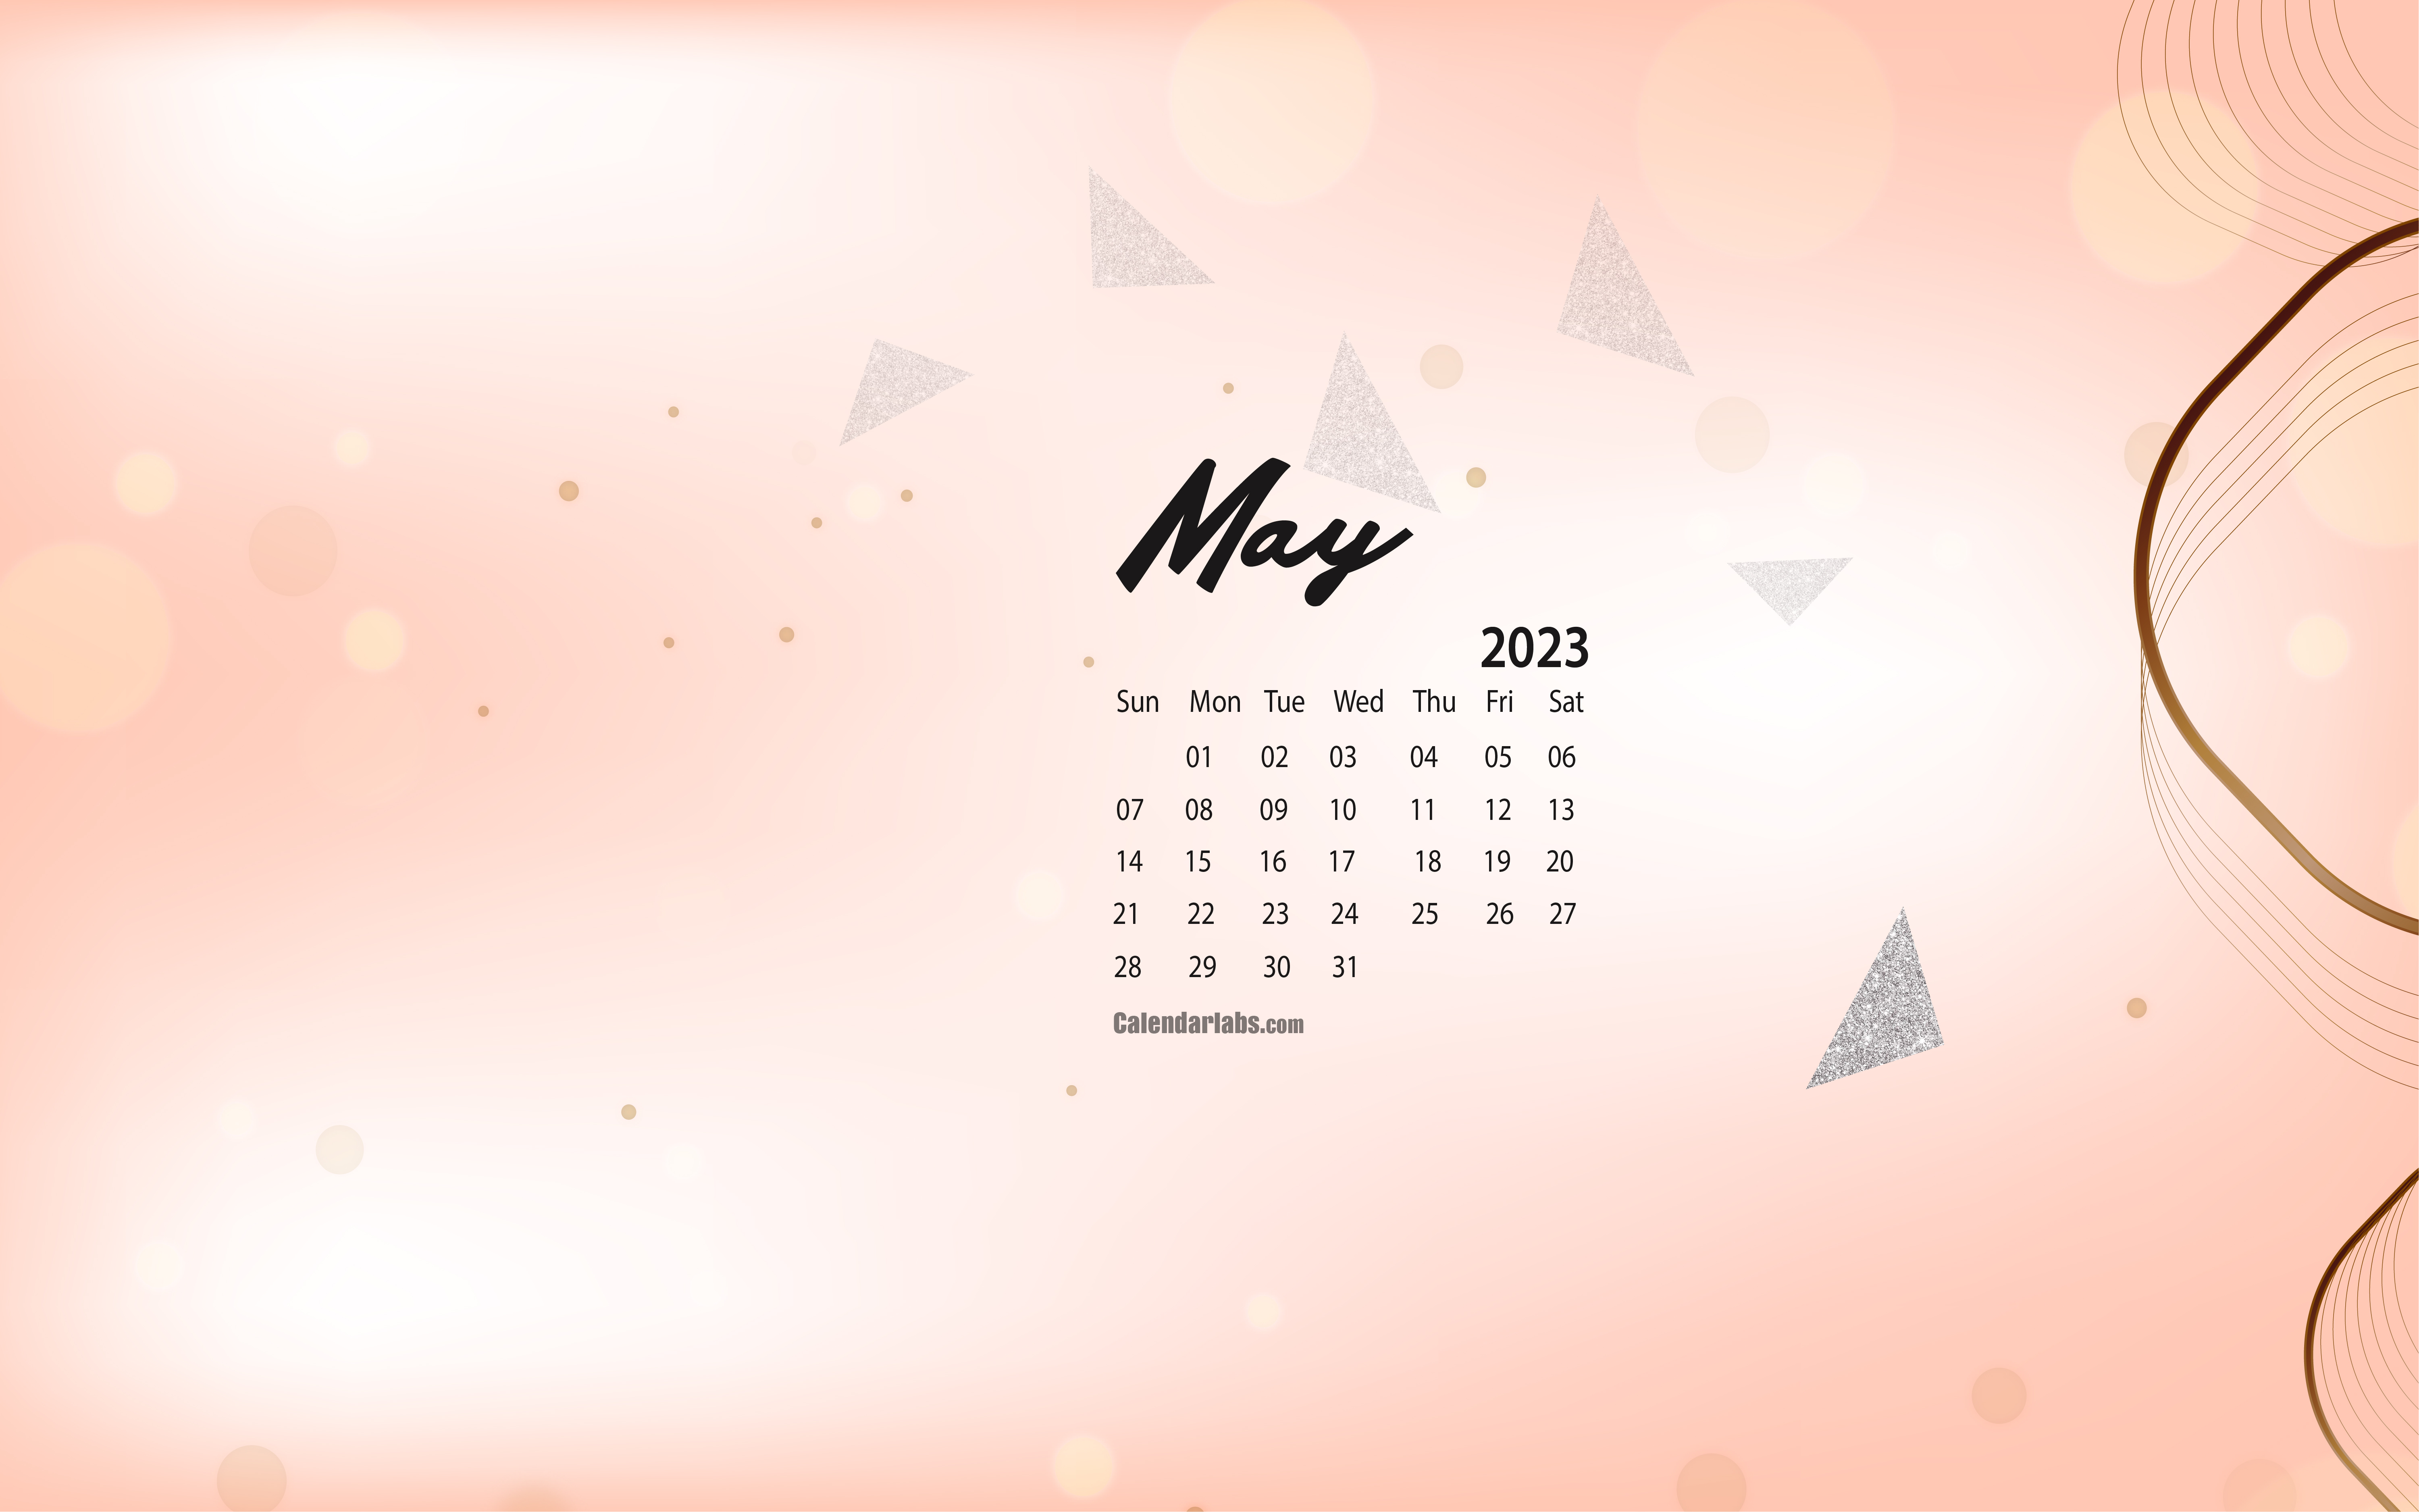 May 2023 Desktop Wallpaper Calendar - CalendarLabs